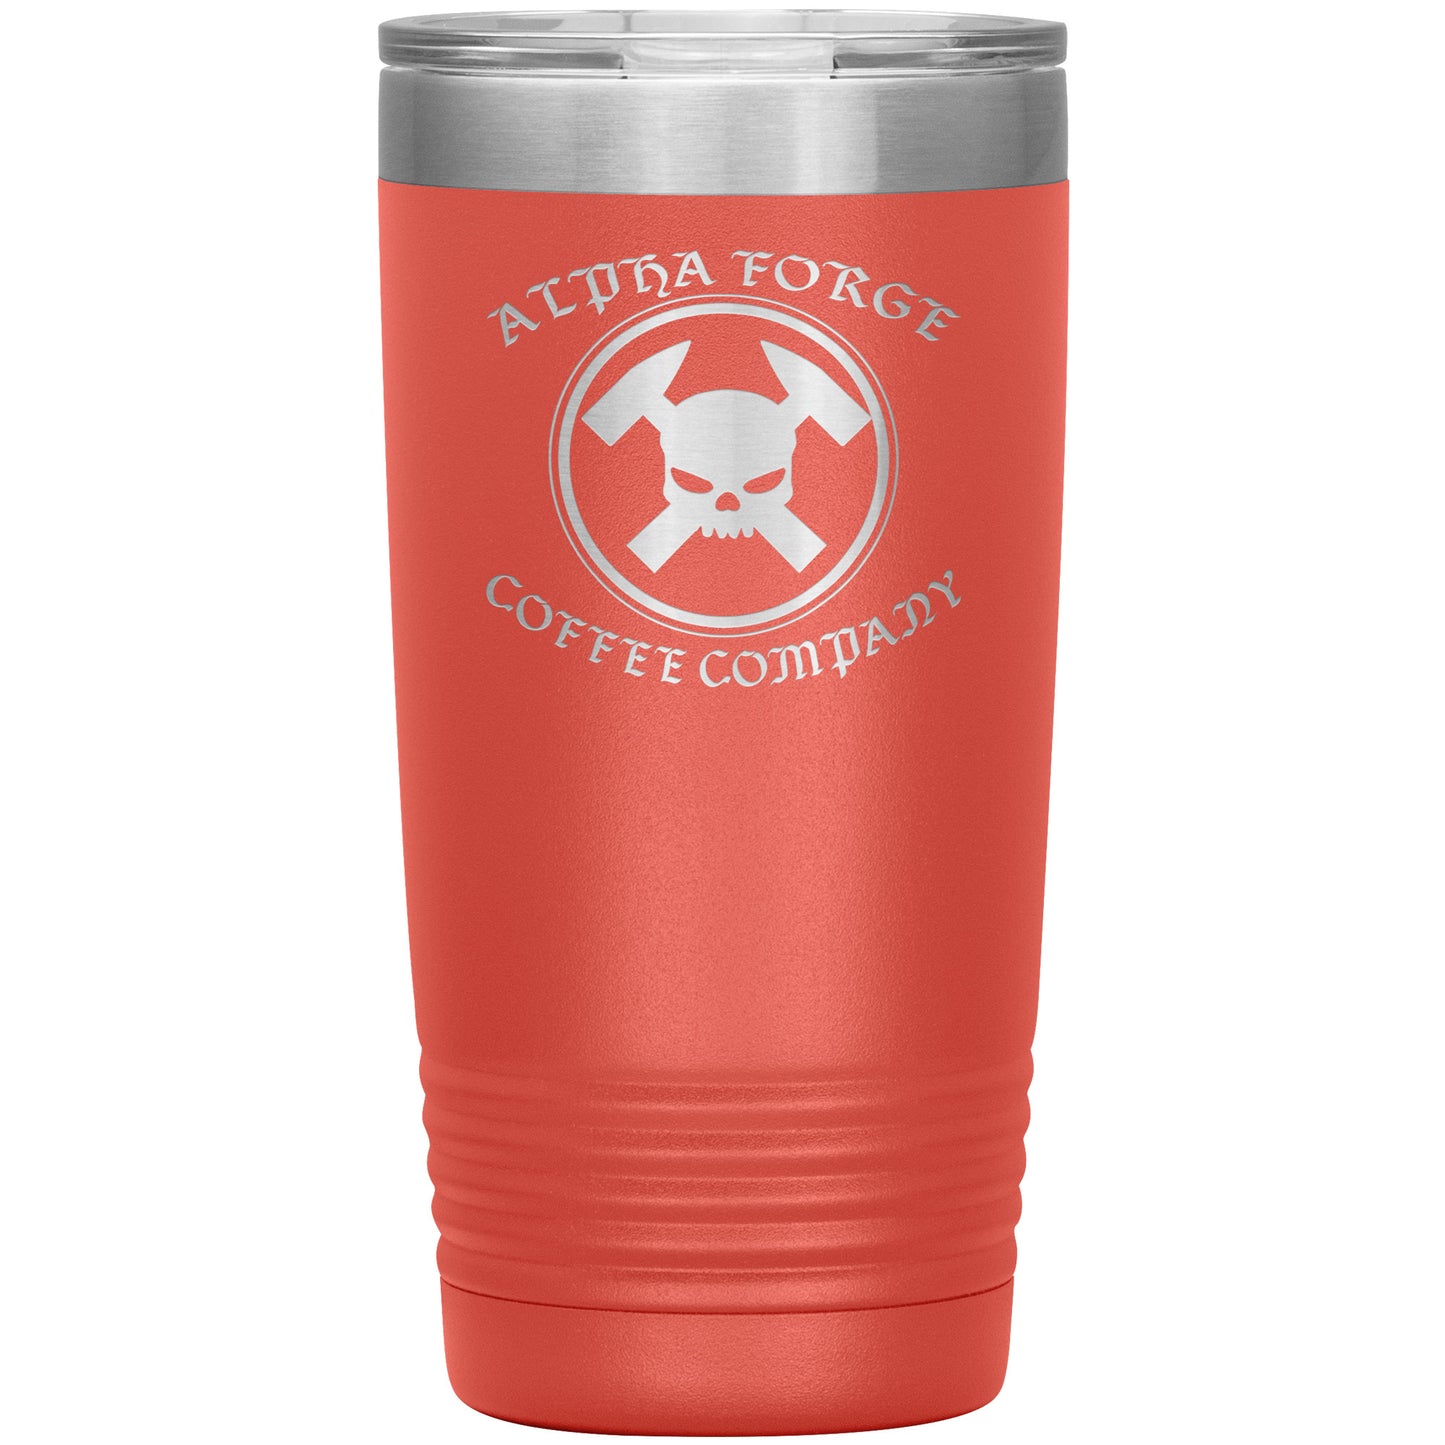 Alpha Forge Coffee Co. 20oz Insulated Tumbler